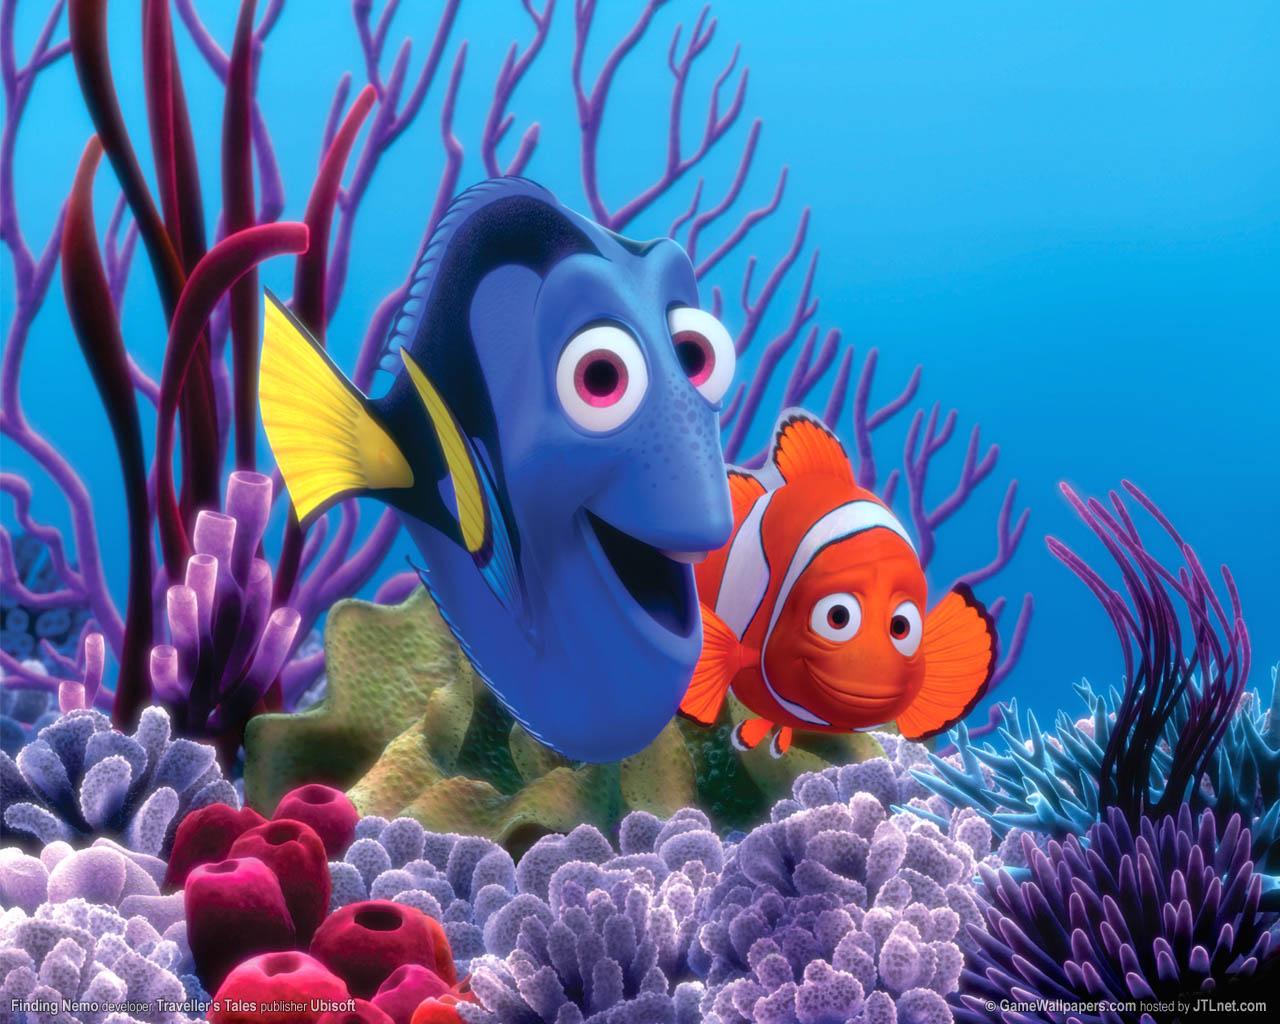 NEMO - Finding Nemo Photo (53764) - Fanpop